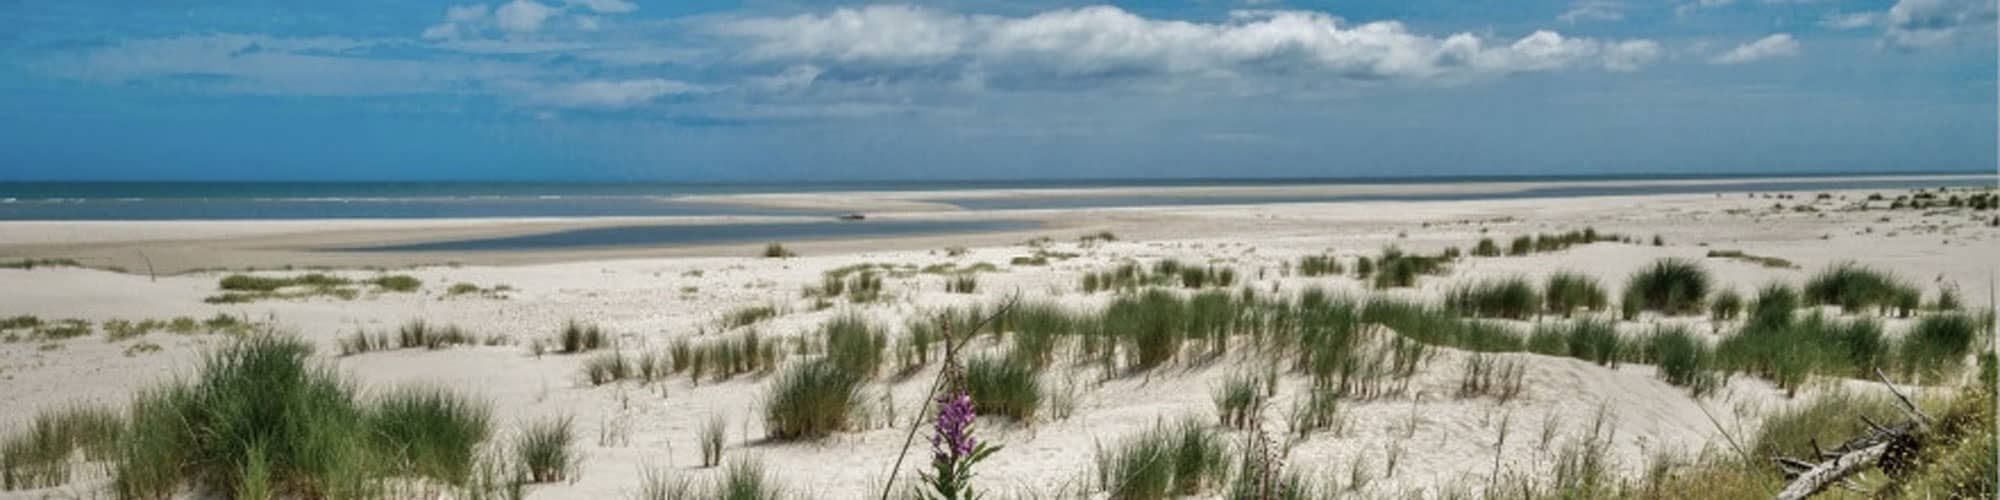 Sandy beach in Ireland